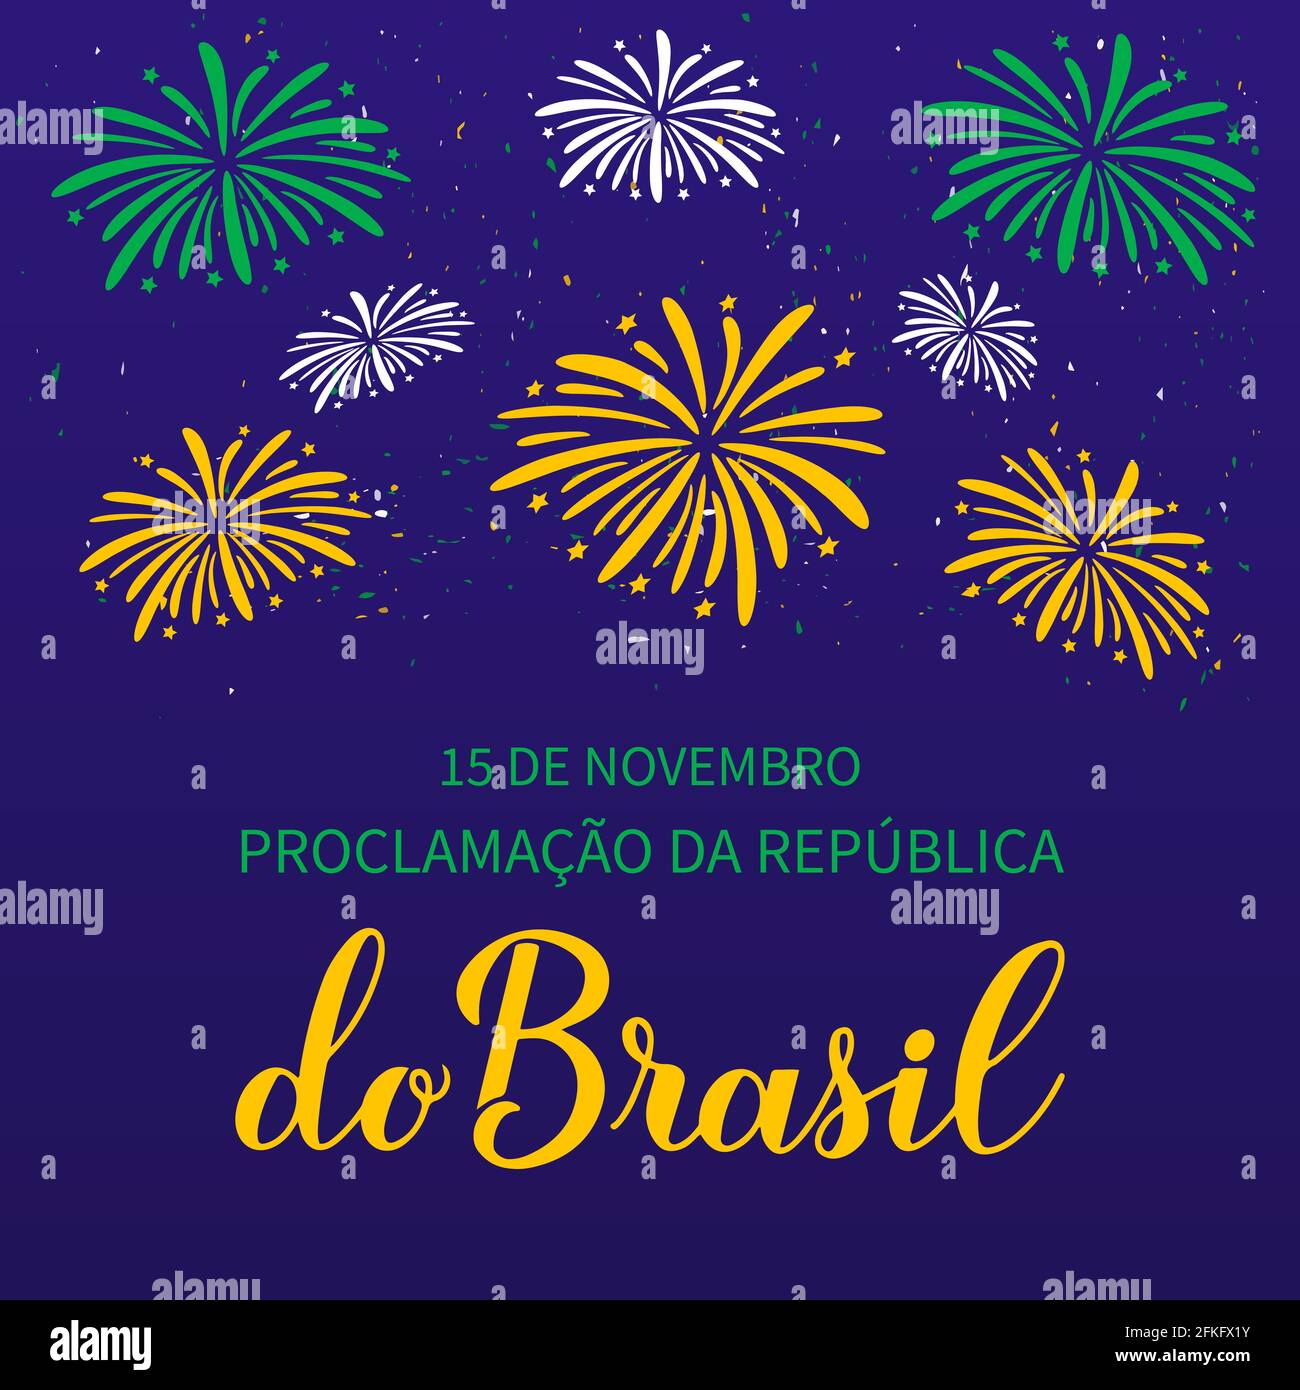 Brazil Greeting Text 15 De Novembro Proclamacao Da Republica Translate  November 15 Proclamation Day Of The Republic In Brasil Vector Illustration  Stock Illustration - Download Image Now - iStock